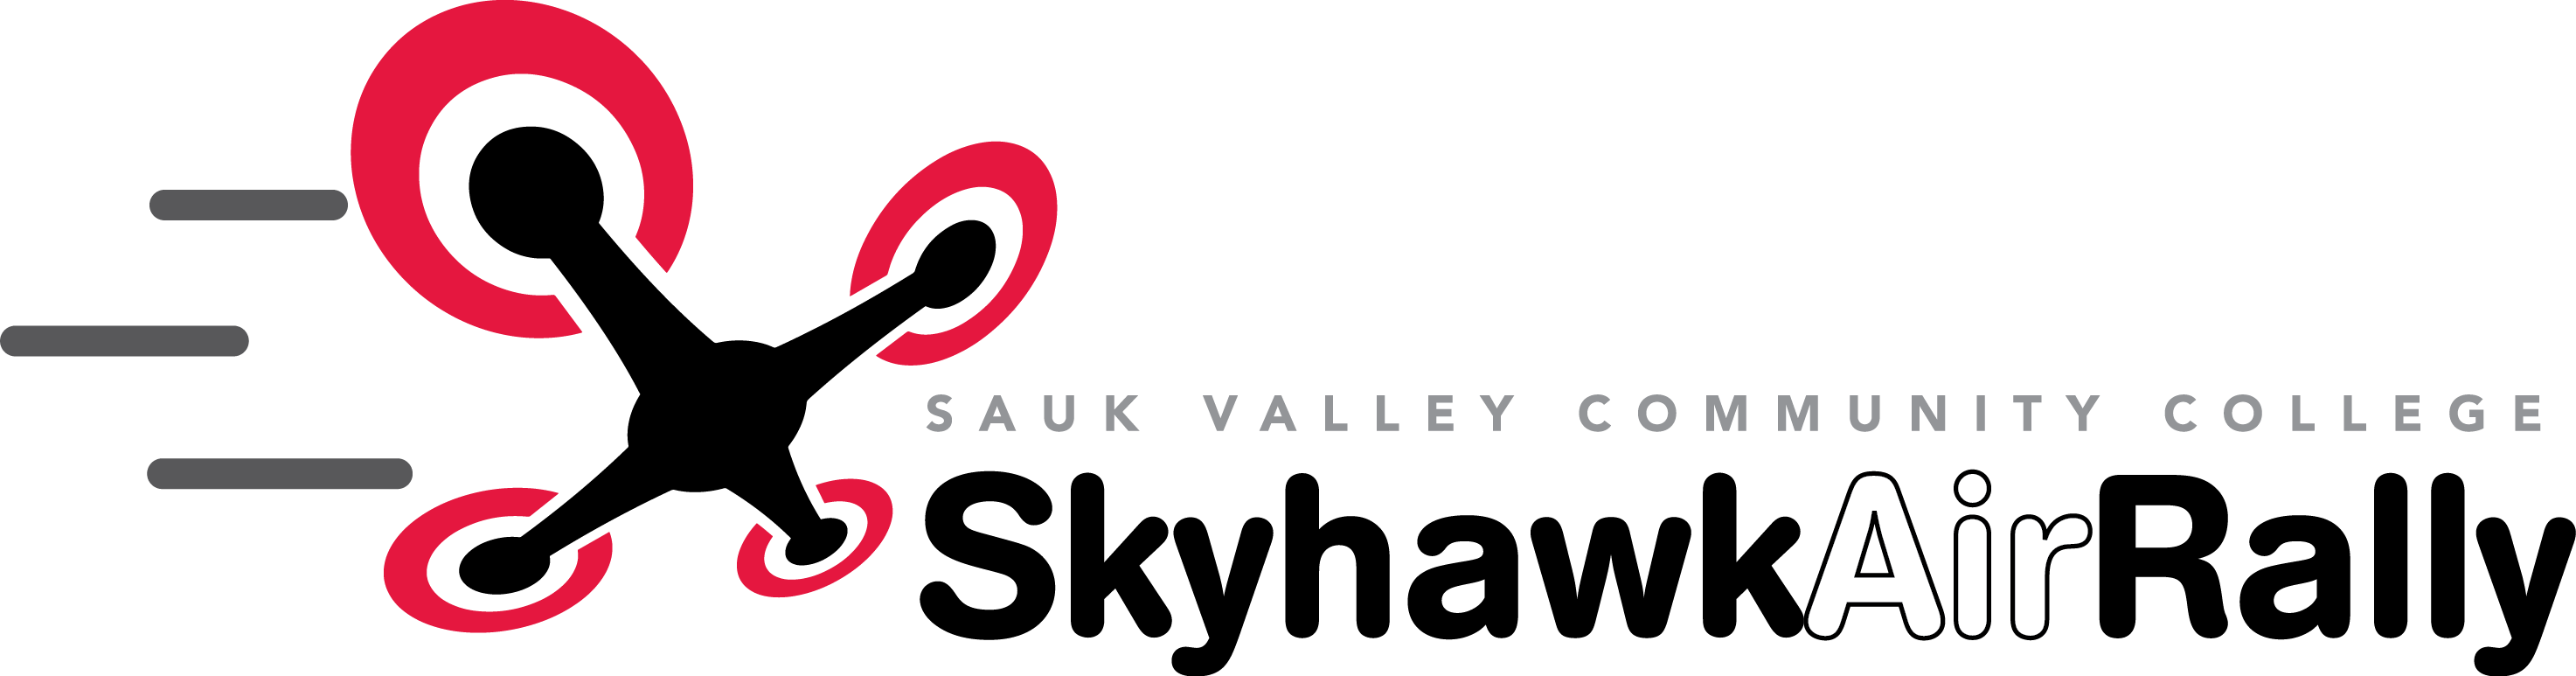 Skyhawk Air Rally